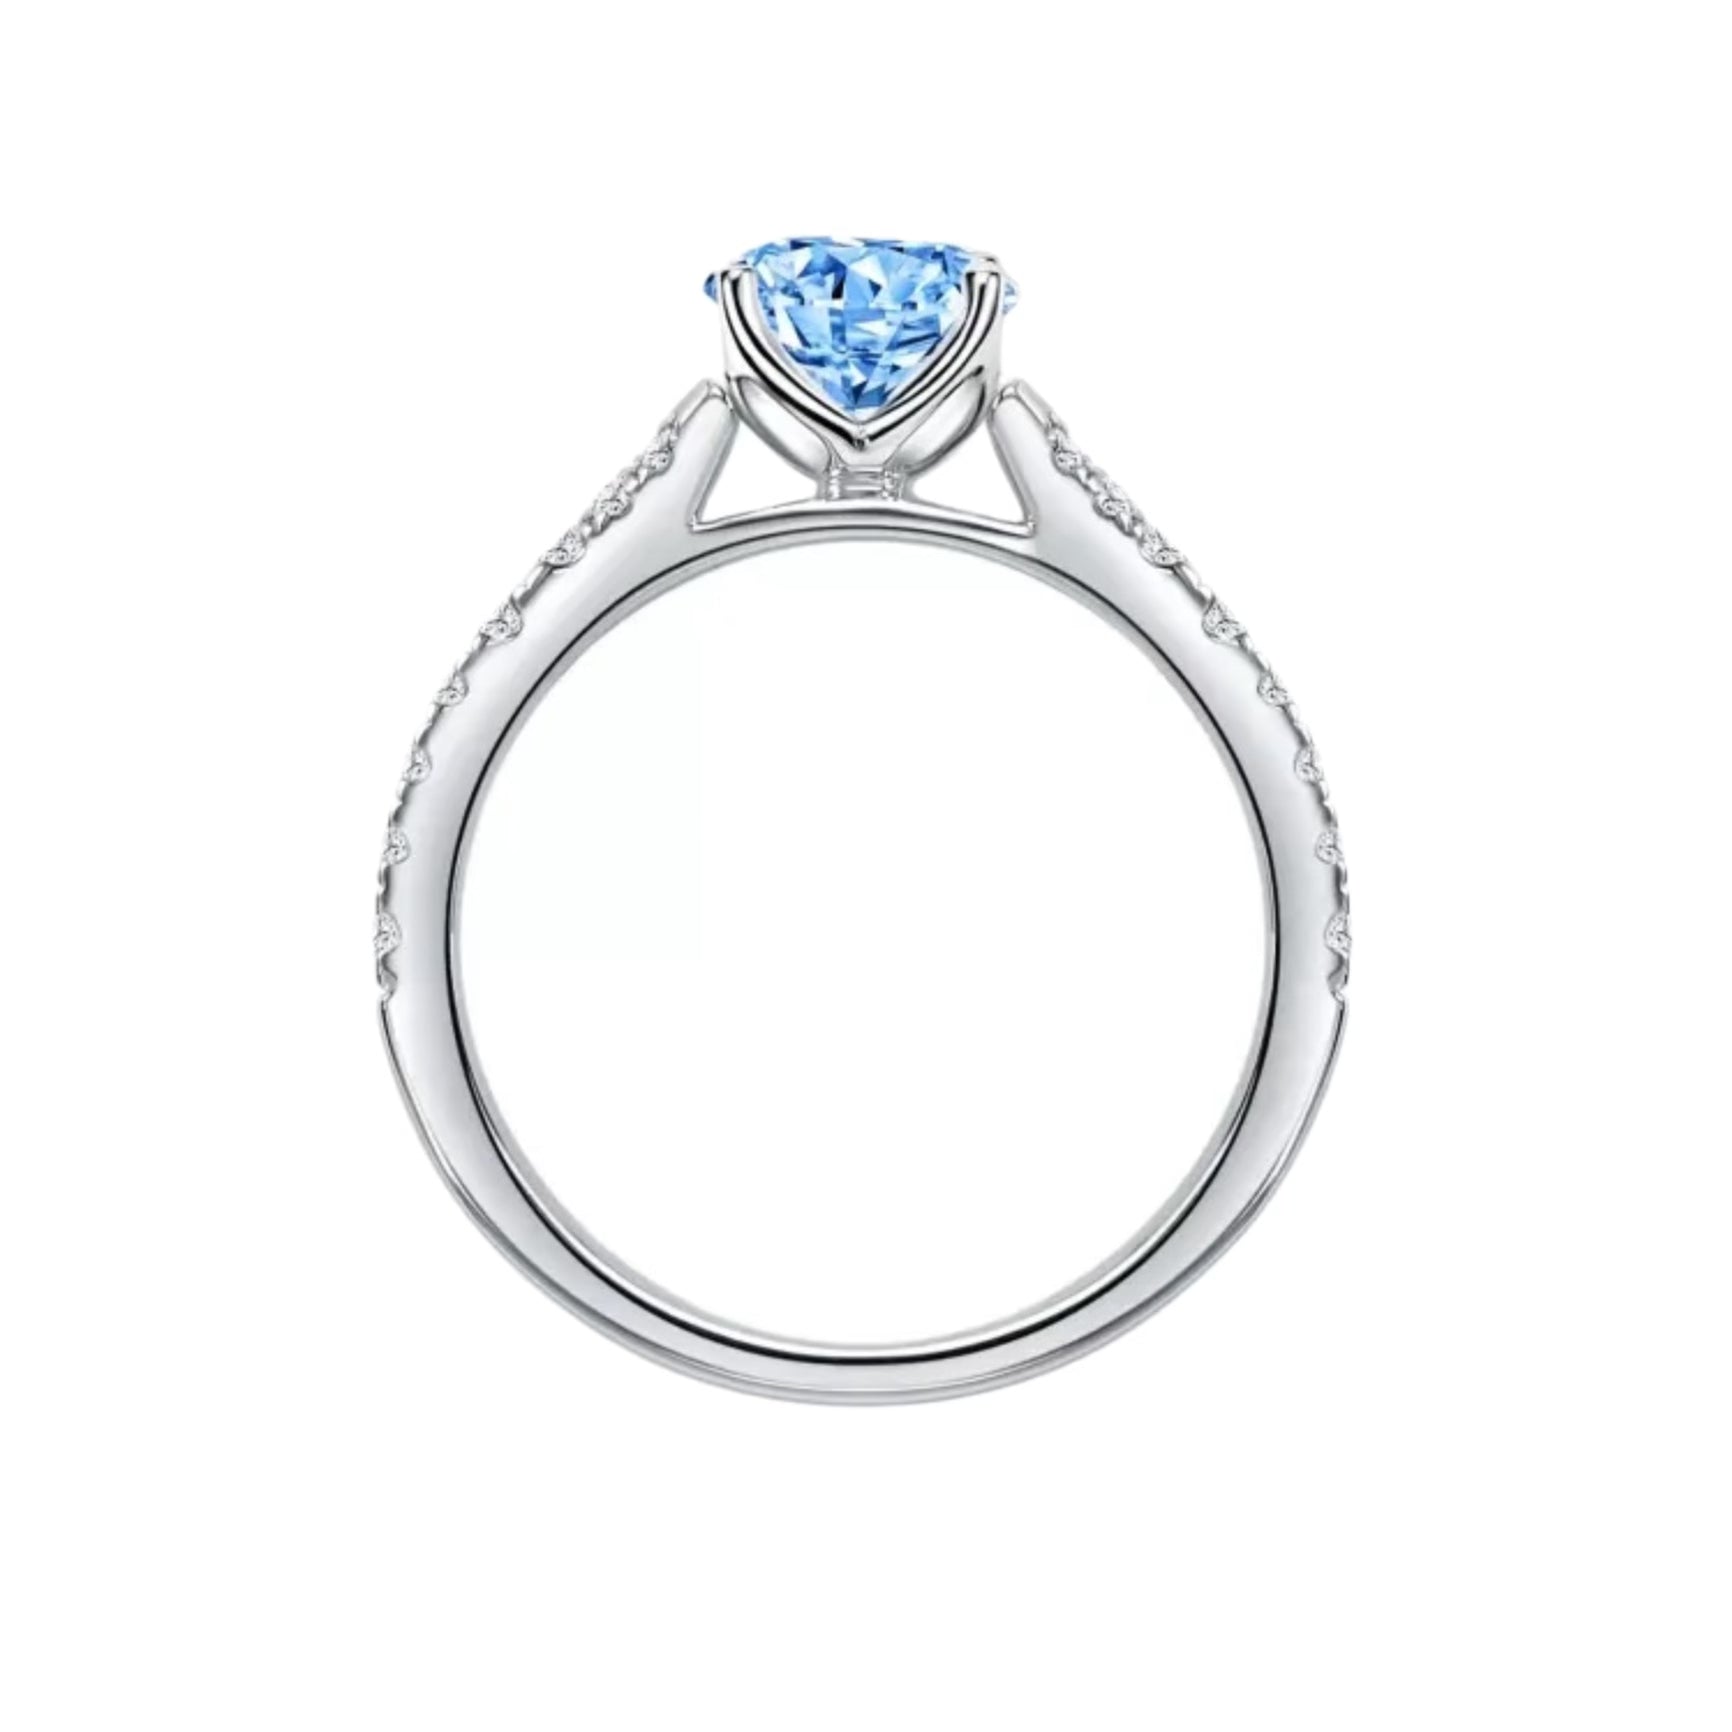 1 Carat Round Cut Lab Created Blue Diamond Pave Solitaire Split Shank Engagement Ring in 18 Karat White Gold - Boutique Pavè